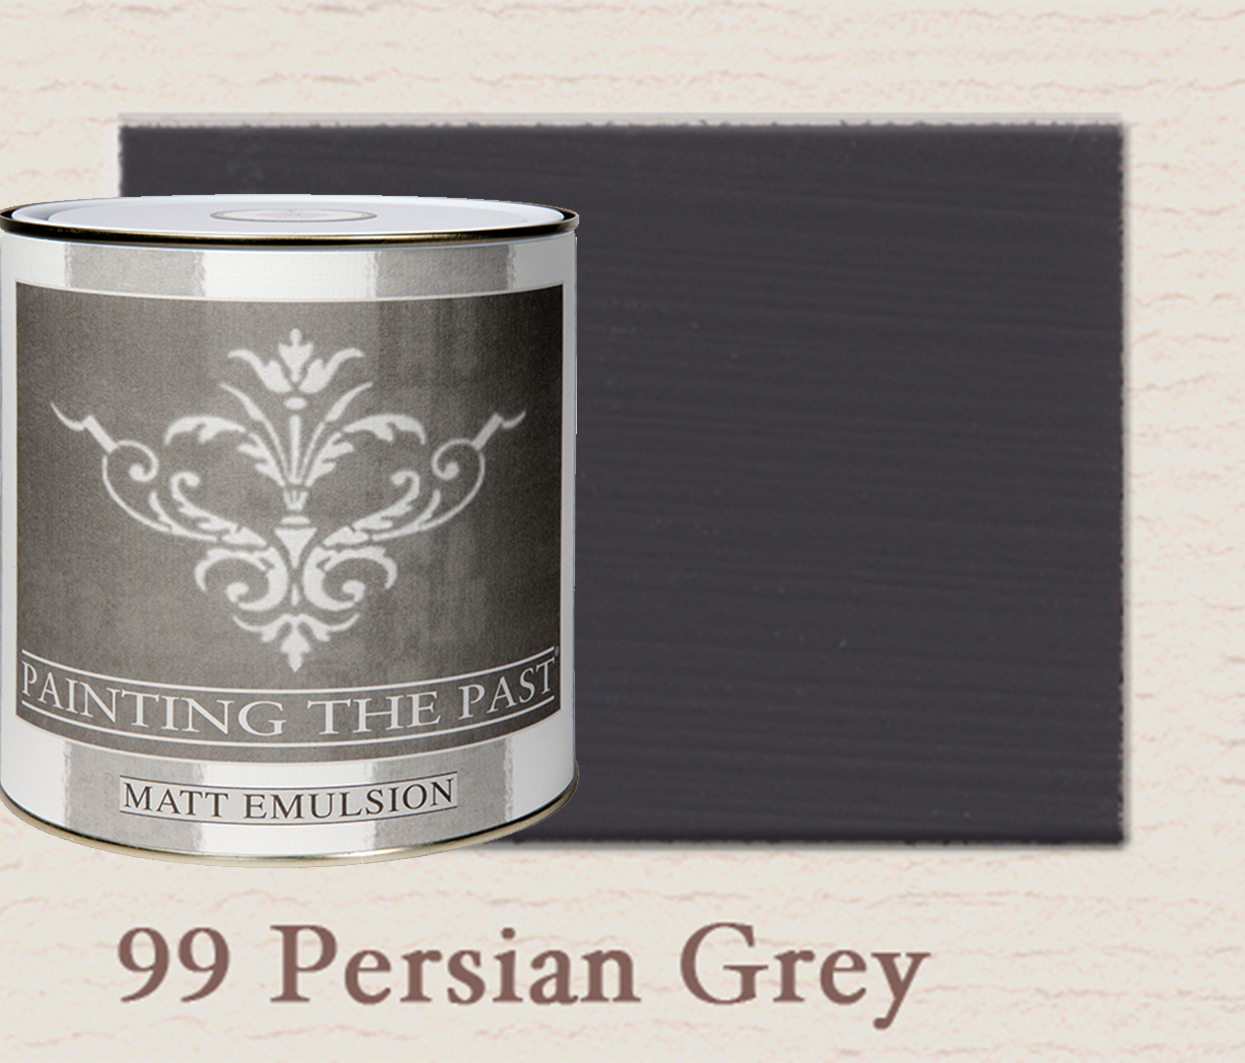 Painting The Past Matt Emulsion Persian Grey